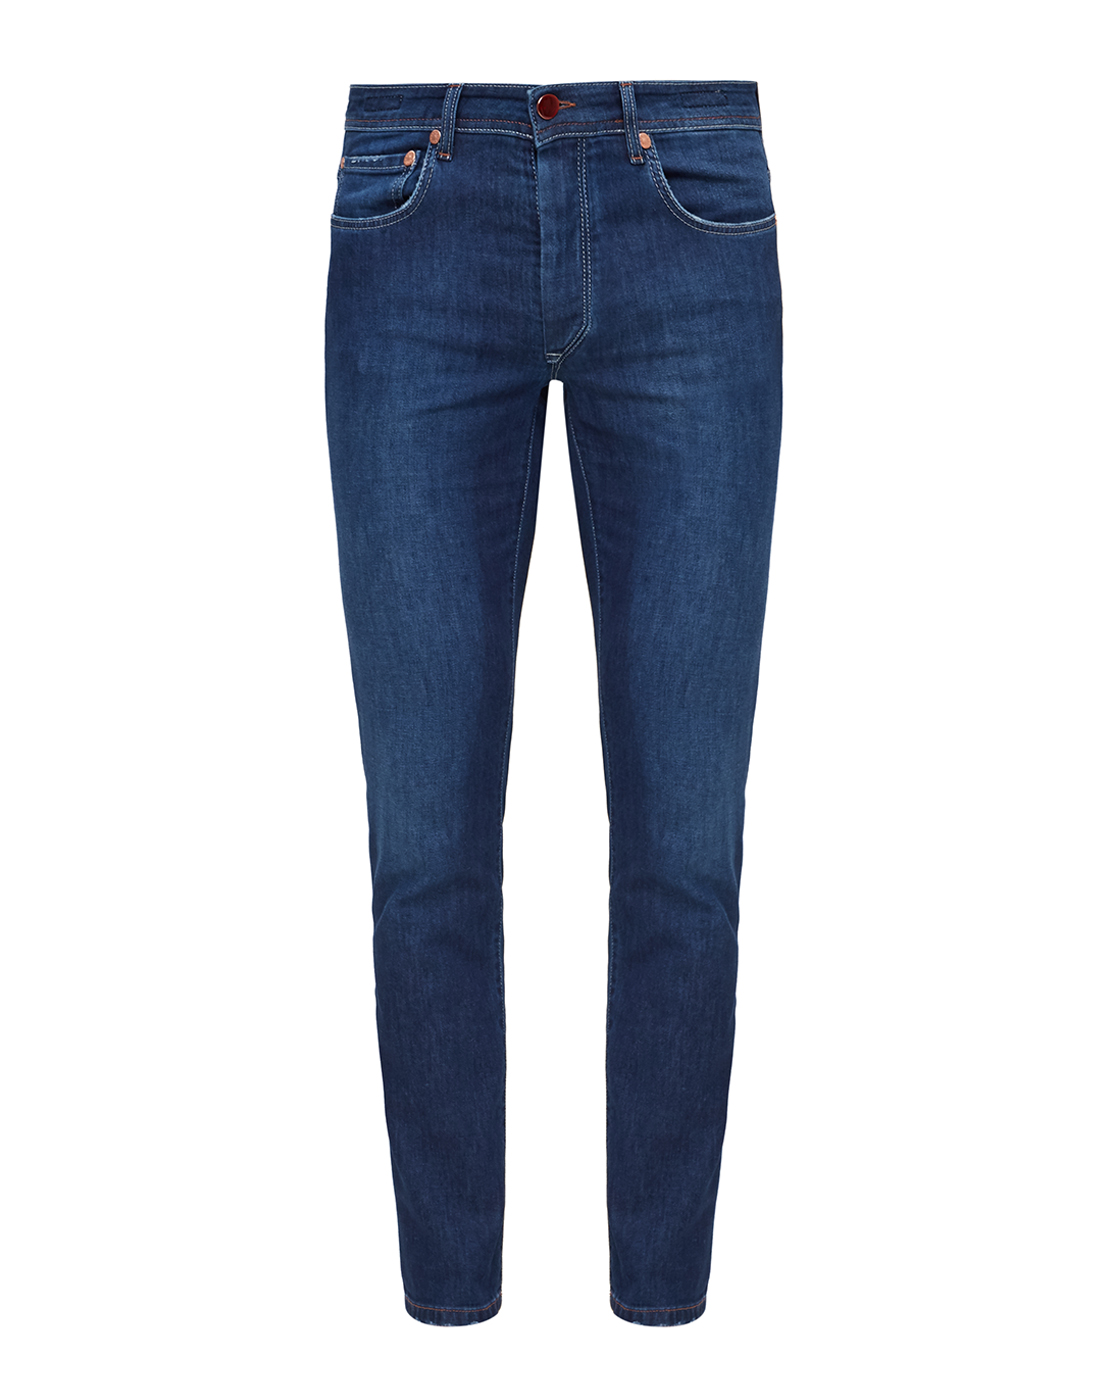 Мужские синие джинсы Barba SFIVE 13561-1